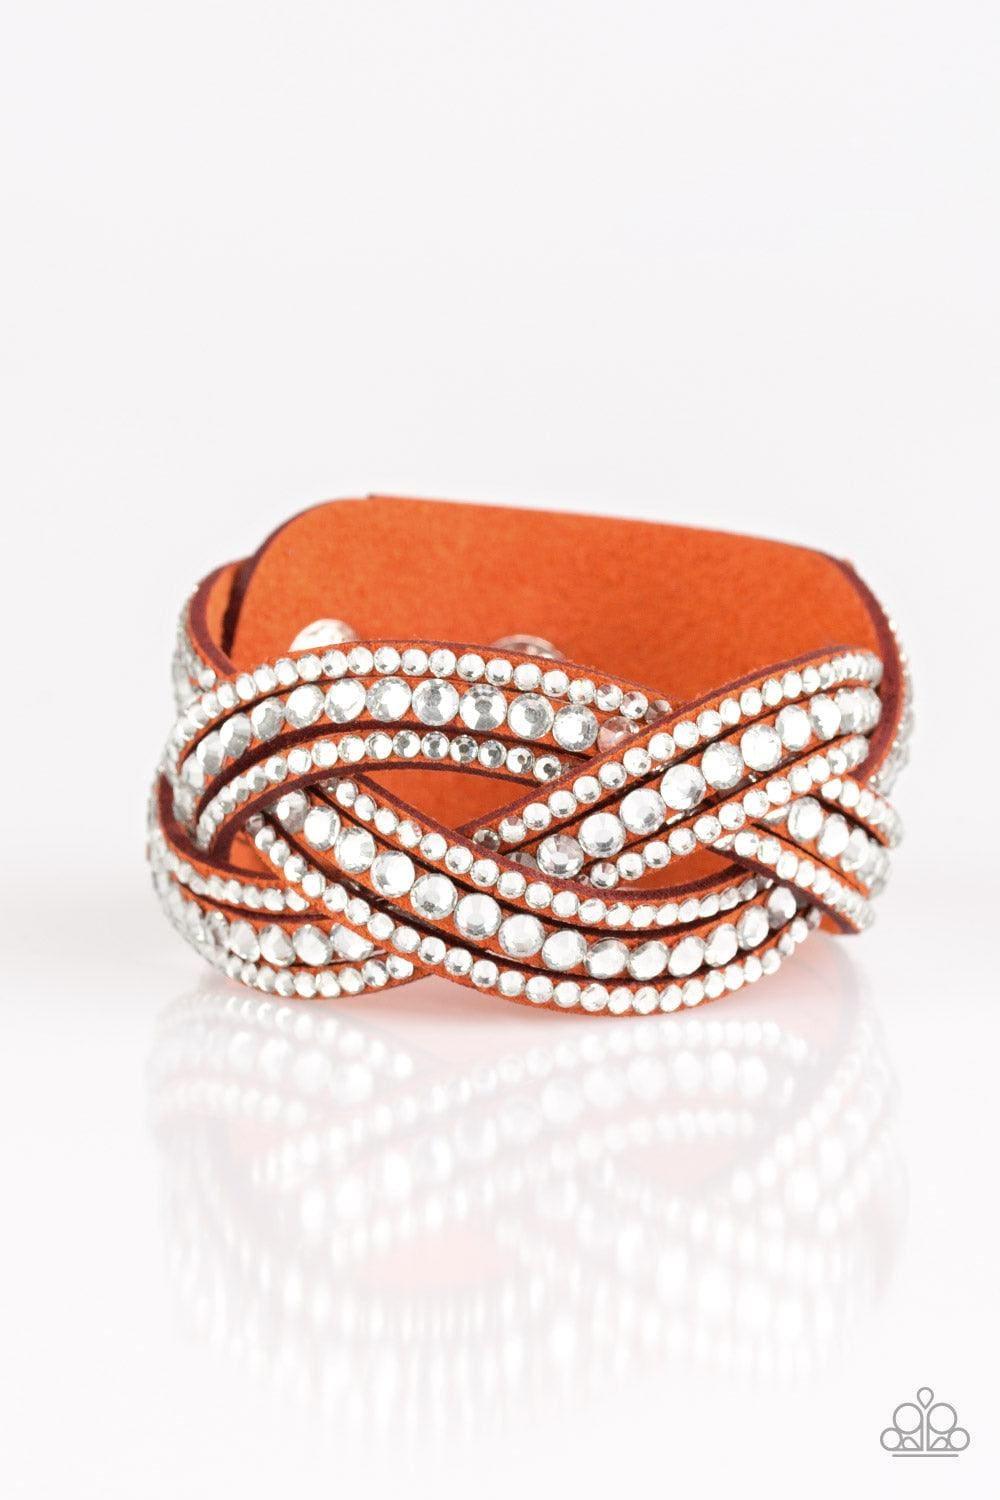 Paparazzi Accessories - Bring On The Bling - Orange Bracelet - Bling by JessieK